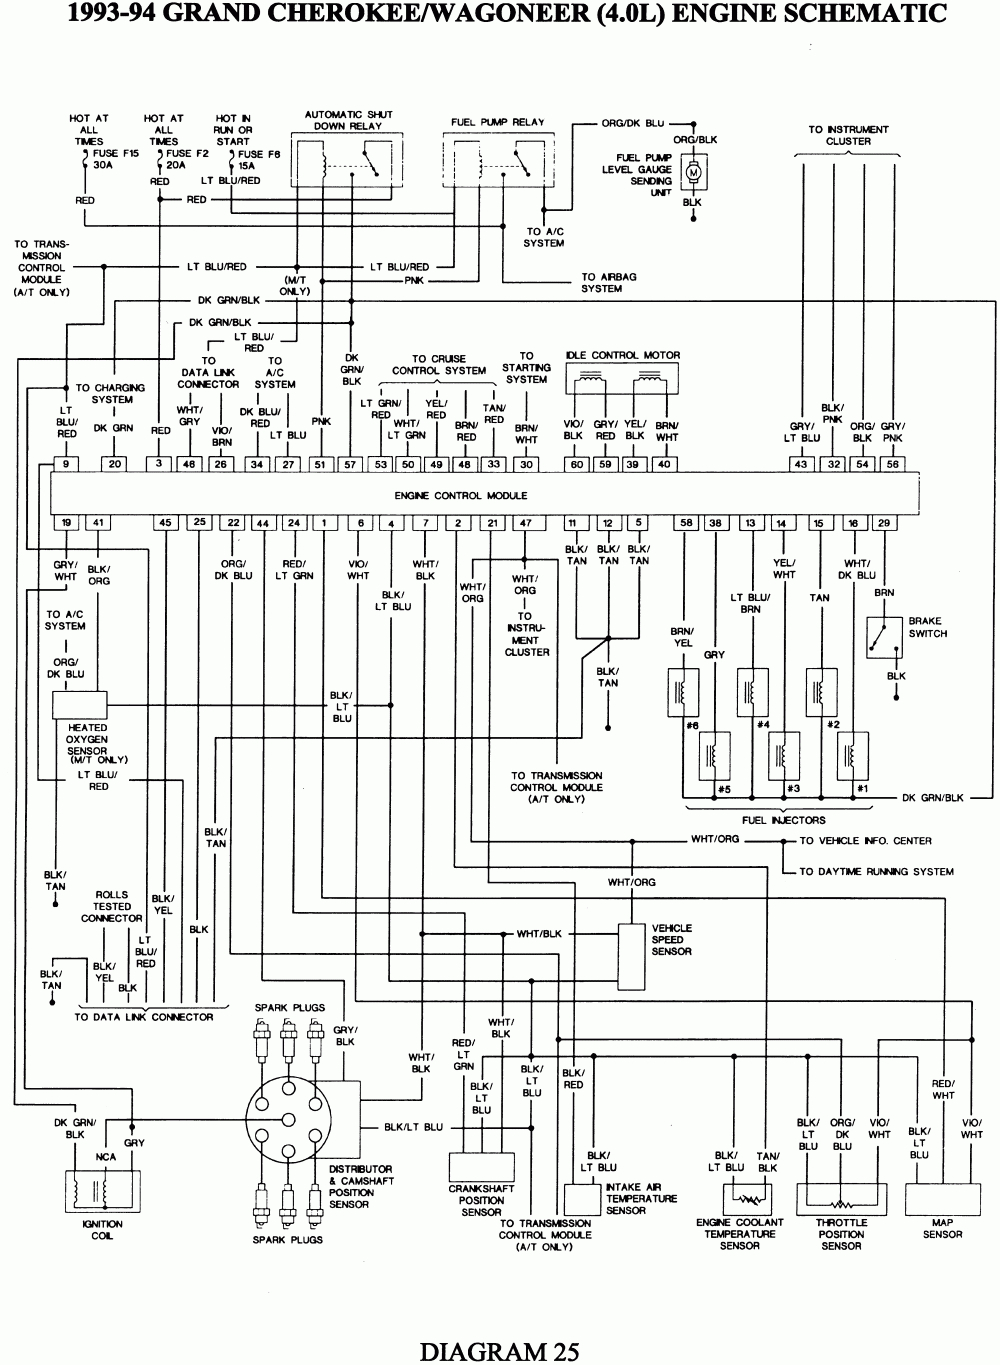 2004 Jeep Wiring Diagram - Wiring Diagrams Click - 2004 Jeep Grand Cherokee Radio Wiring Diagram